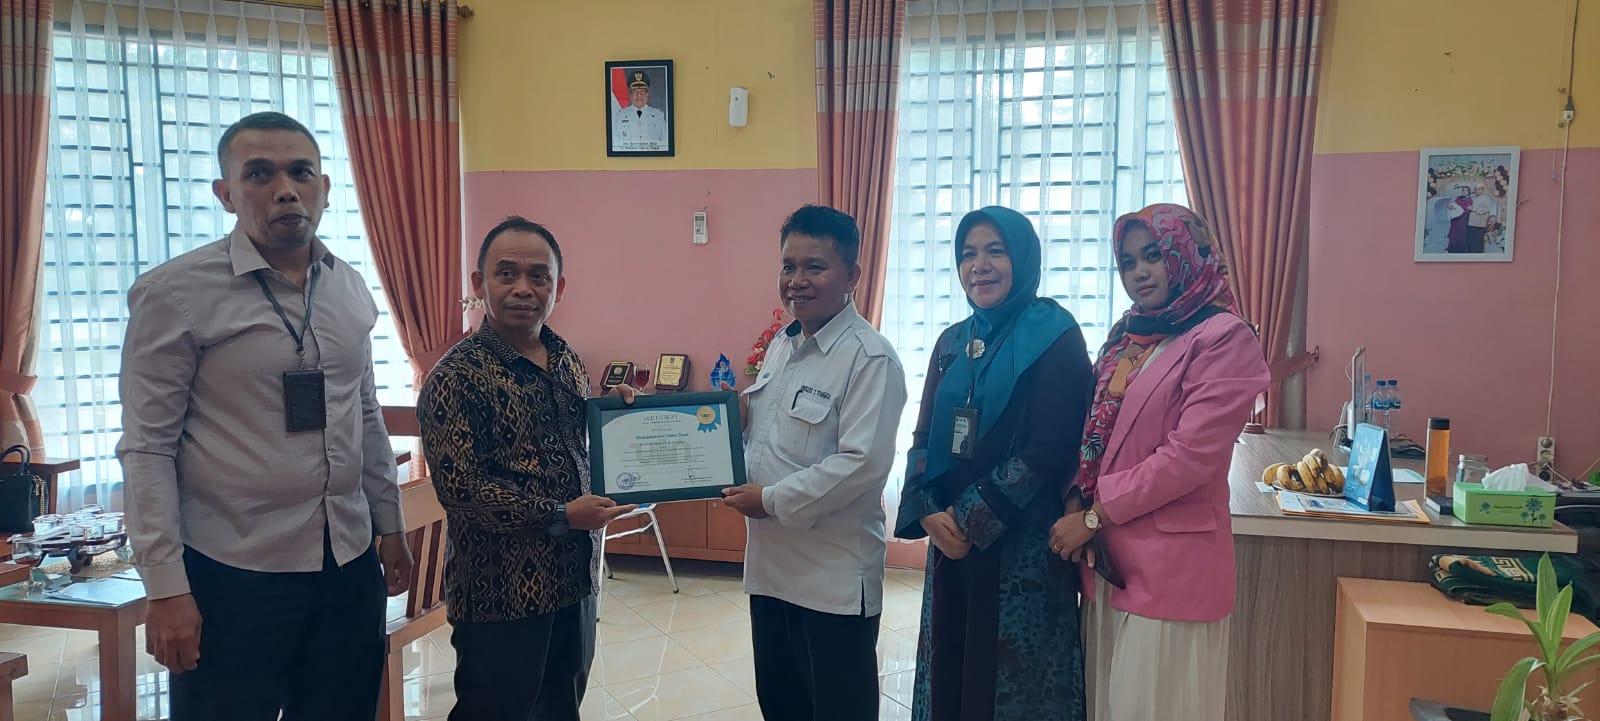 Dinas sosial tebing tinggi - Dinas Sosial Kota Tebing Tinggi Jalin Kerja Sama Dengan UIN Sumatera Utara